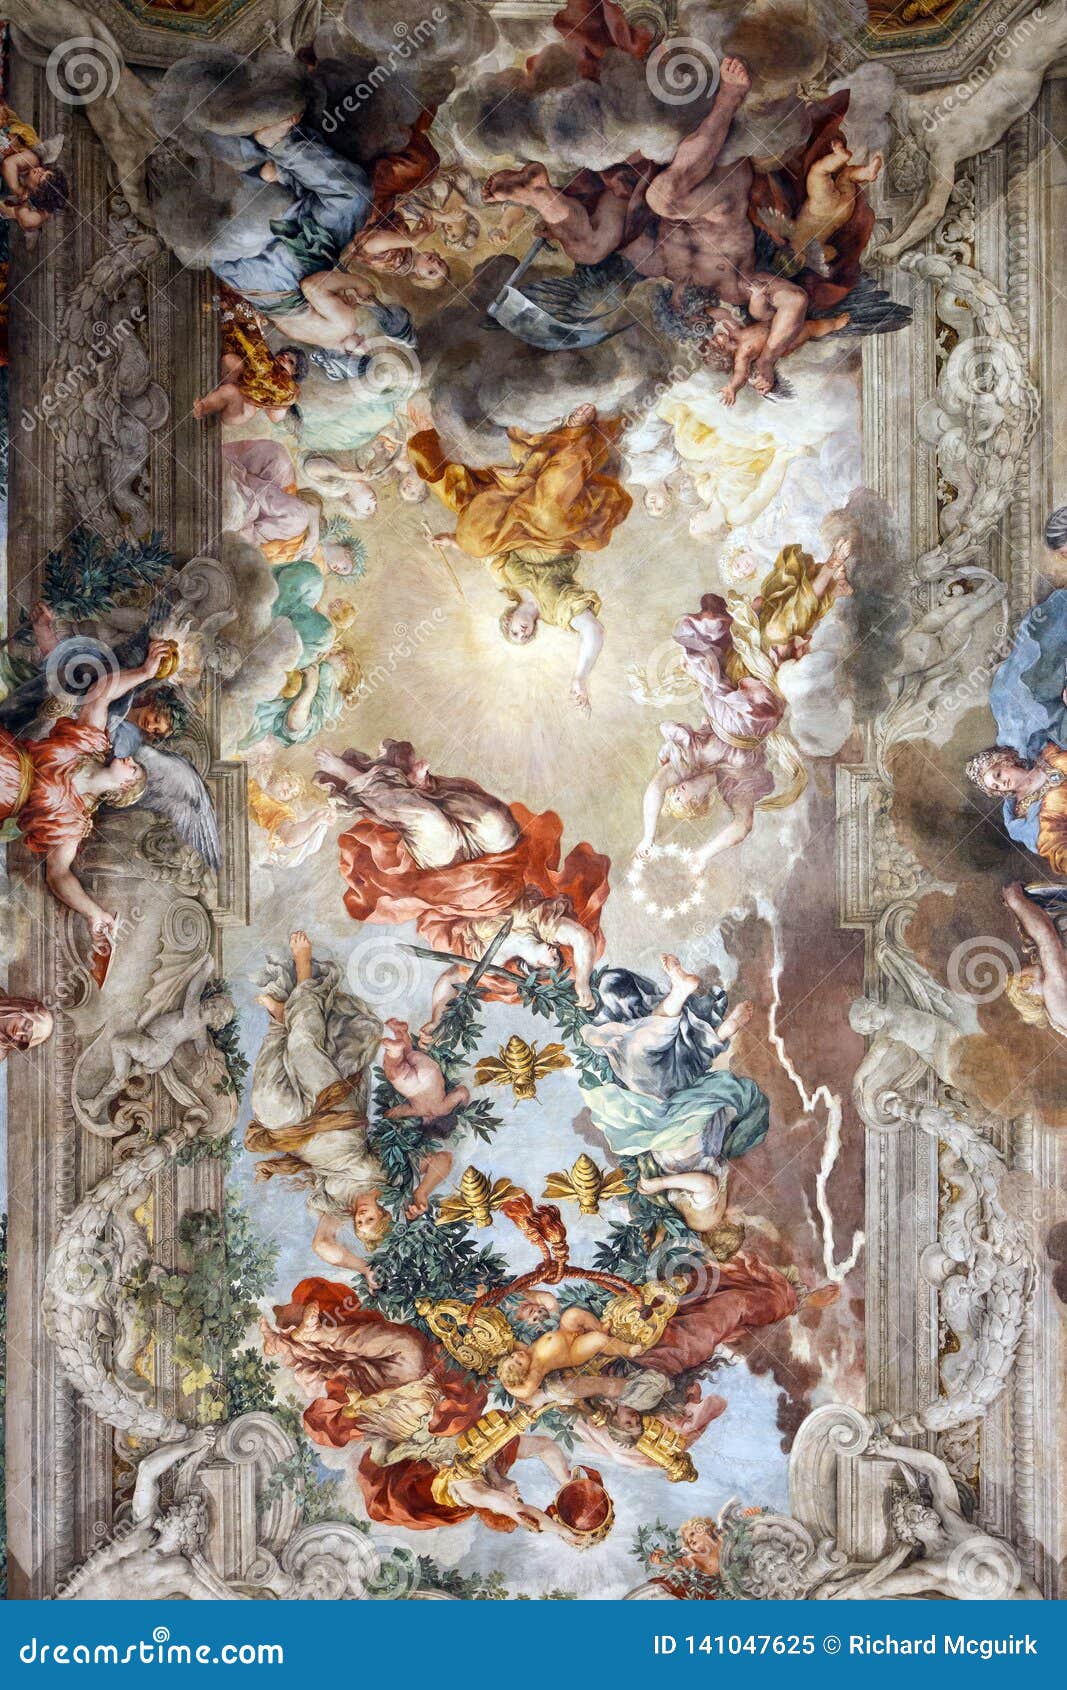 rennaissance religious italian ceiling frescos